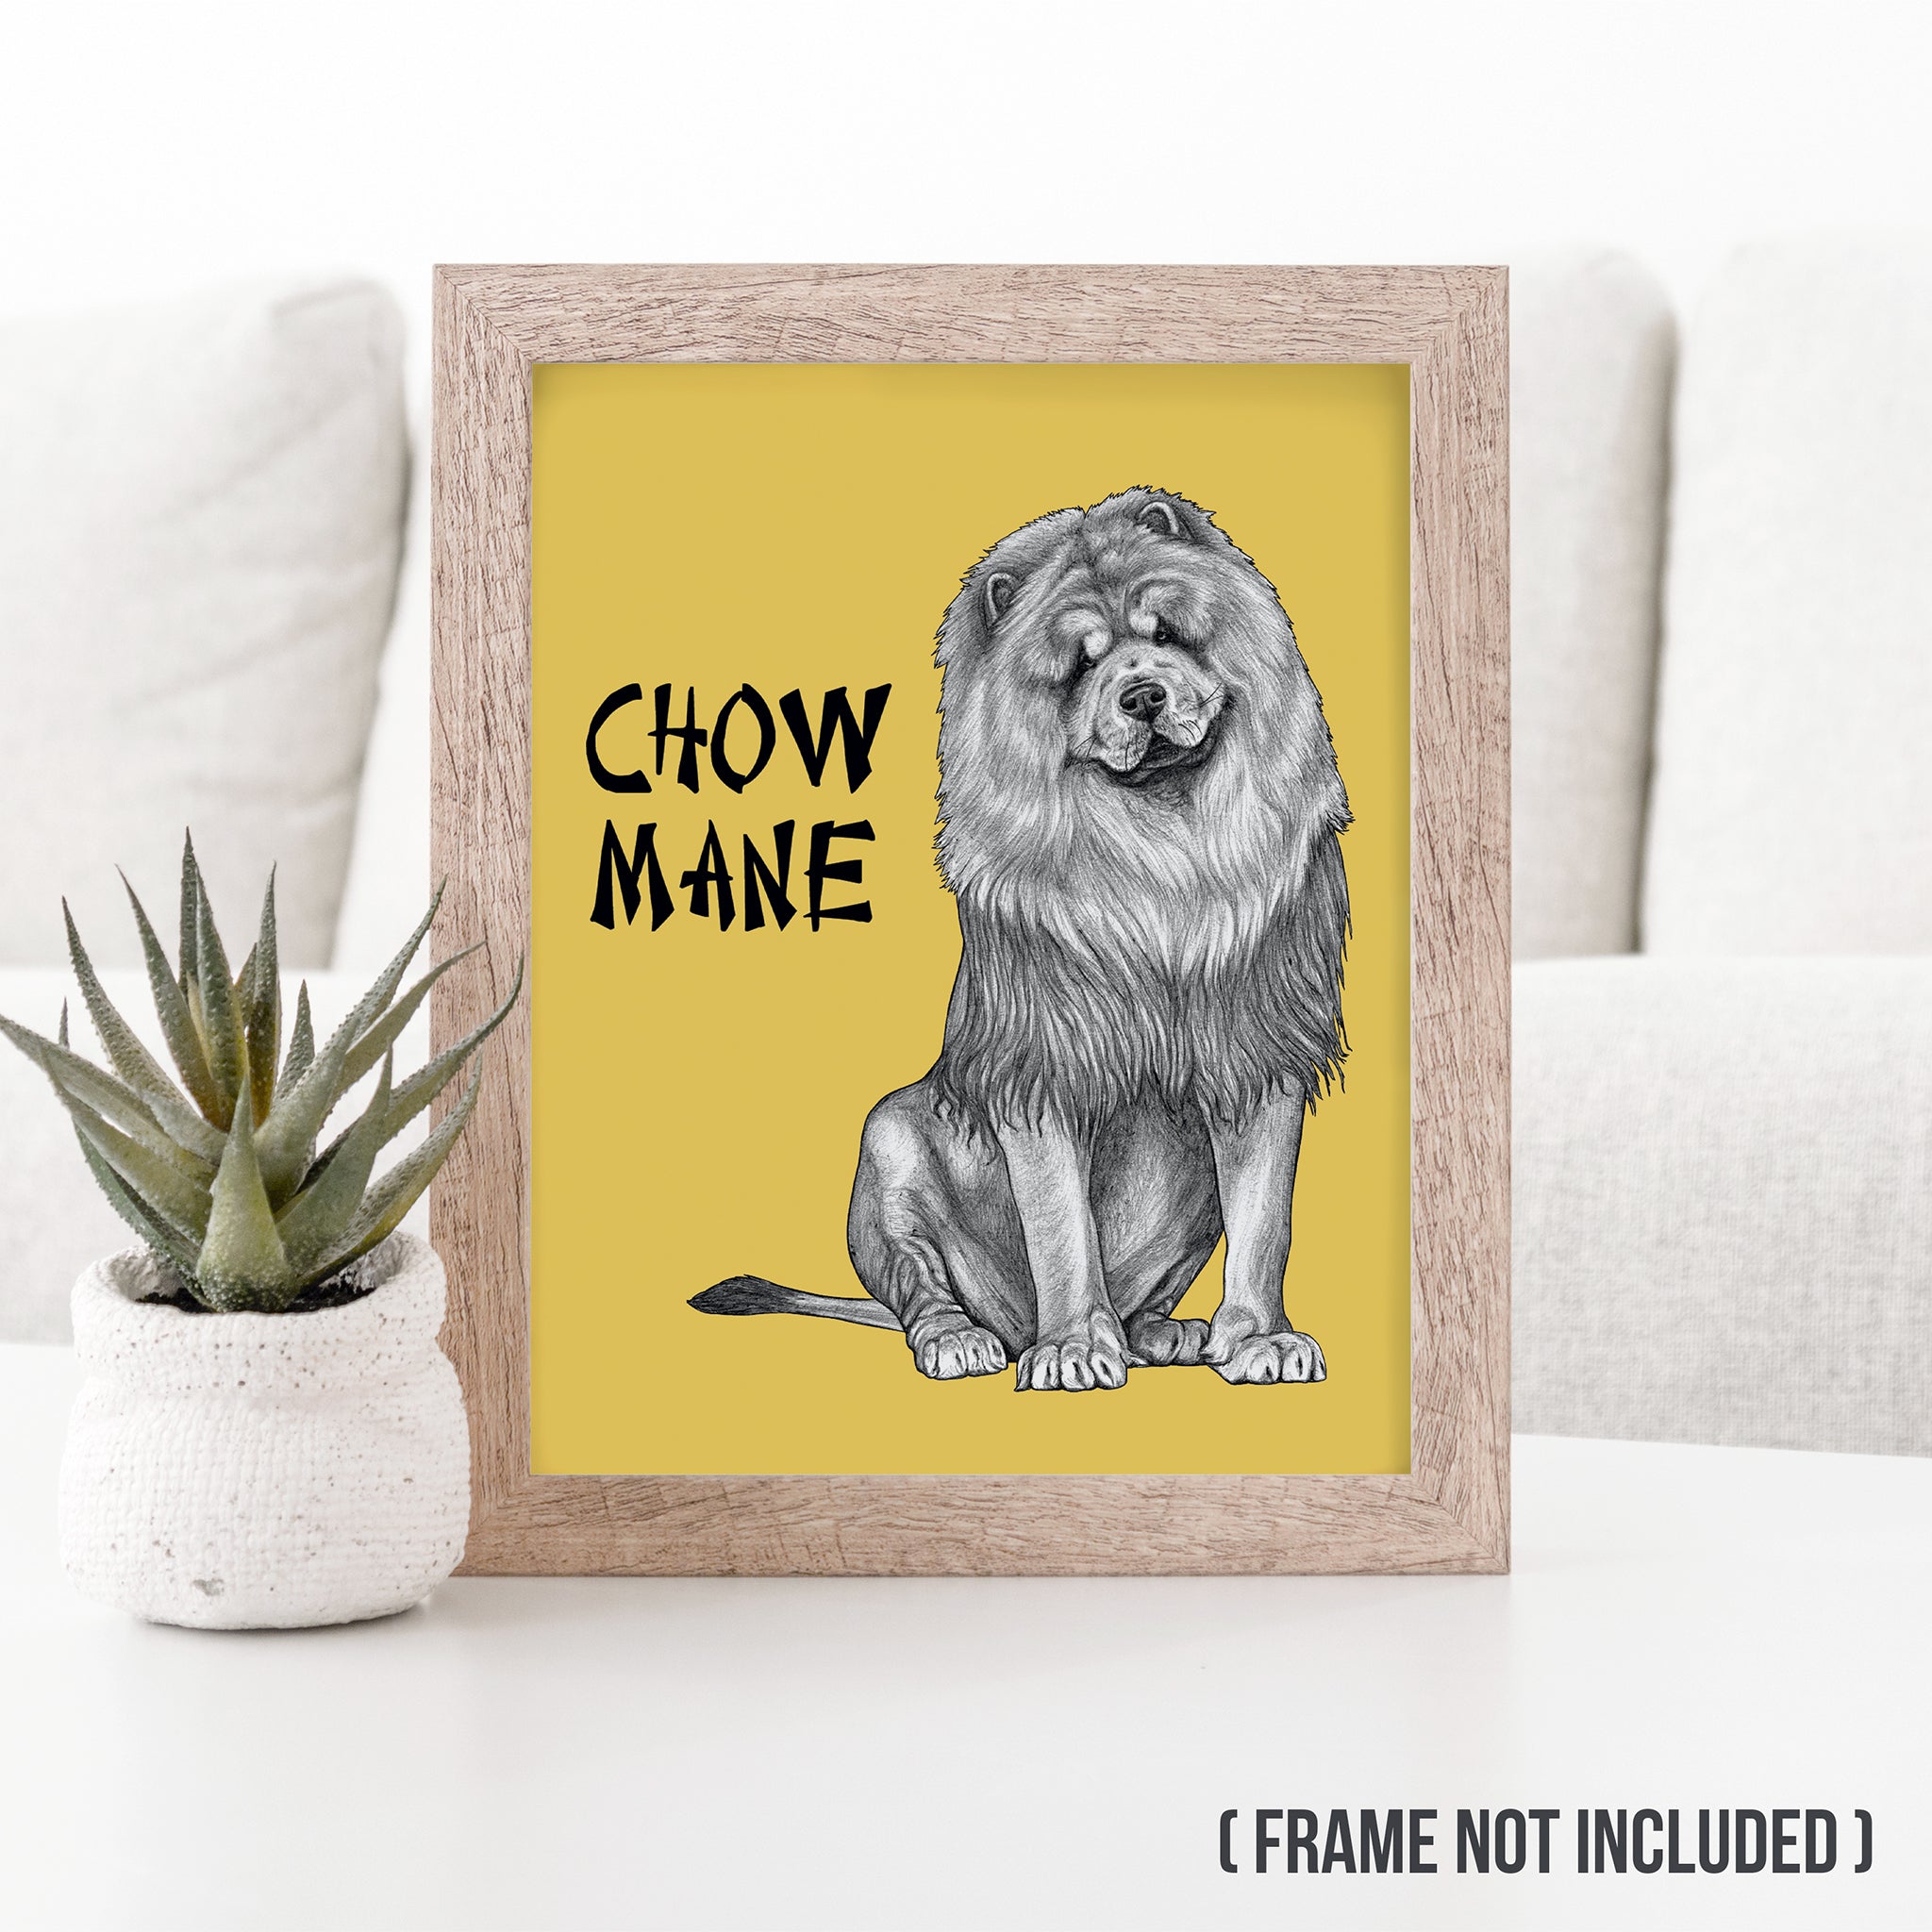 Chow Mane 8x10" Color Print